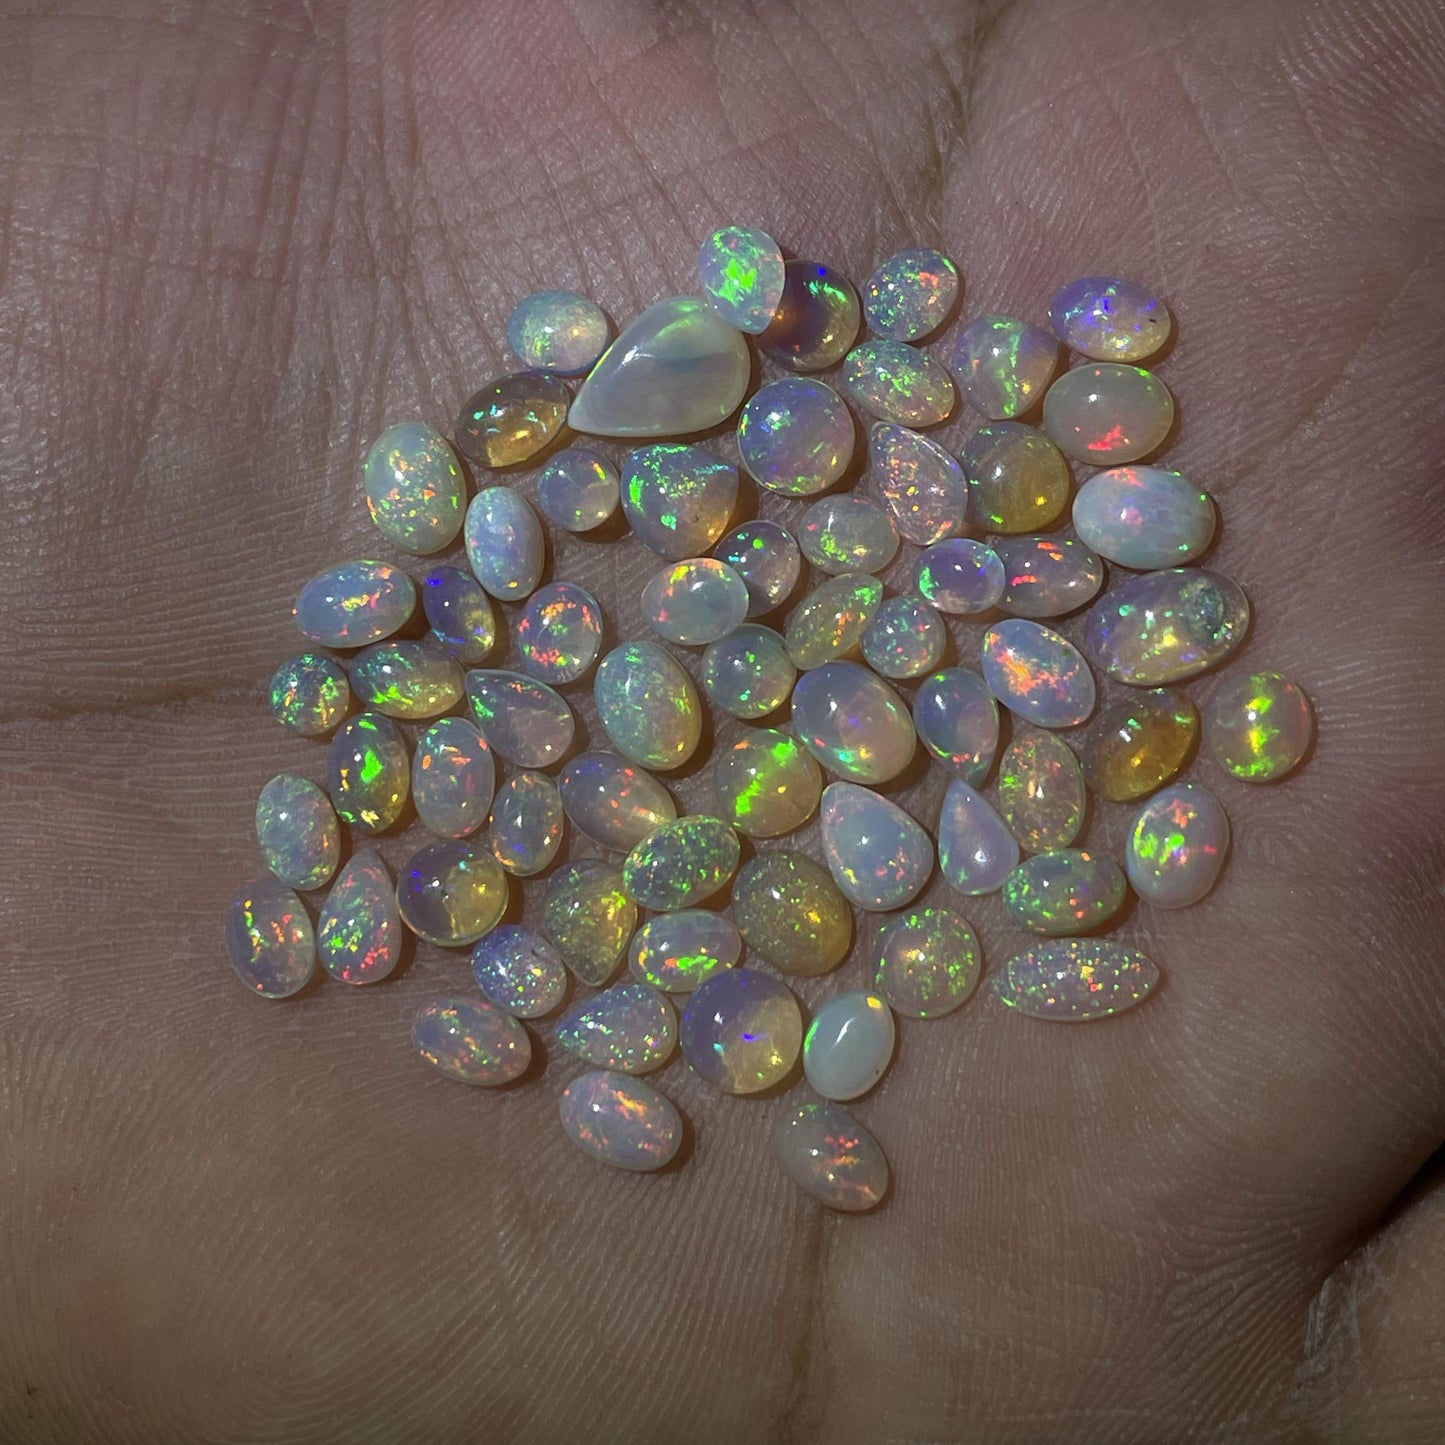 Captivating Beauty: Natural Ethiopian Opal Cabochon - Average Size of 0.3 cts